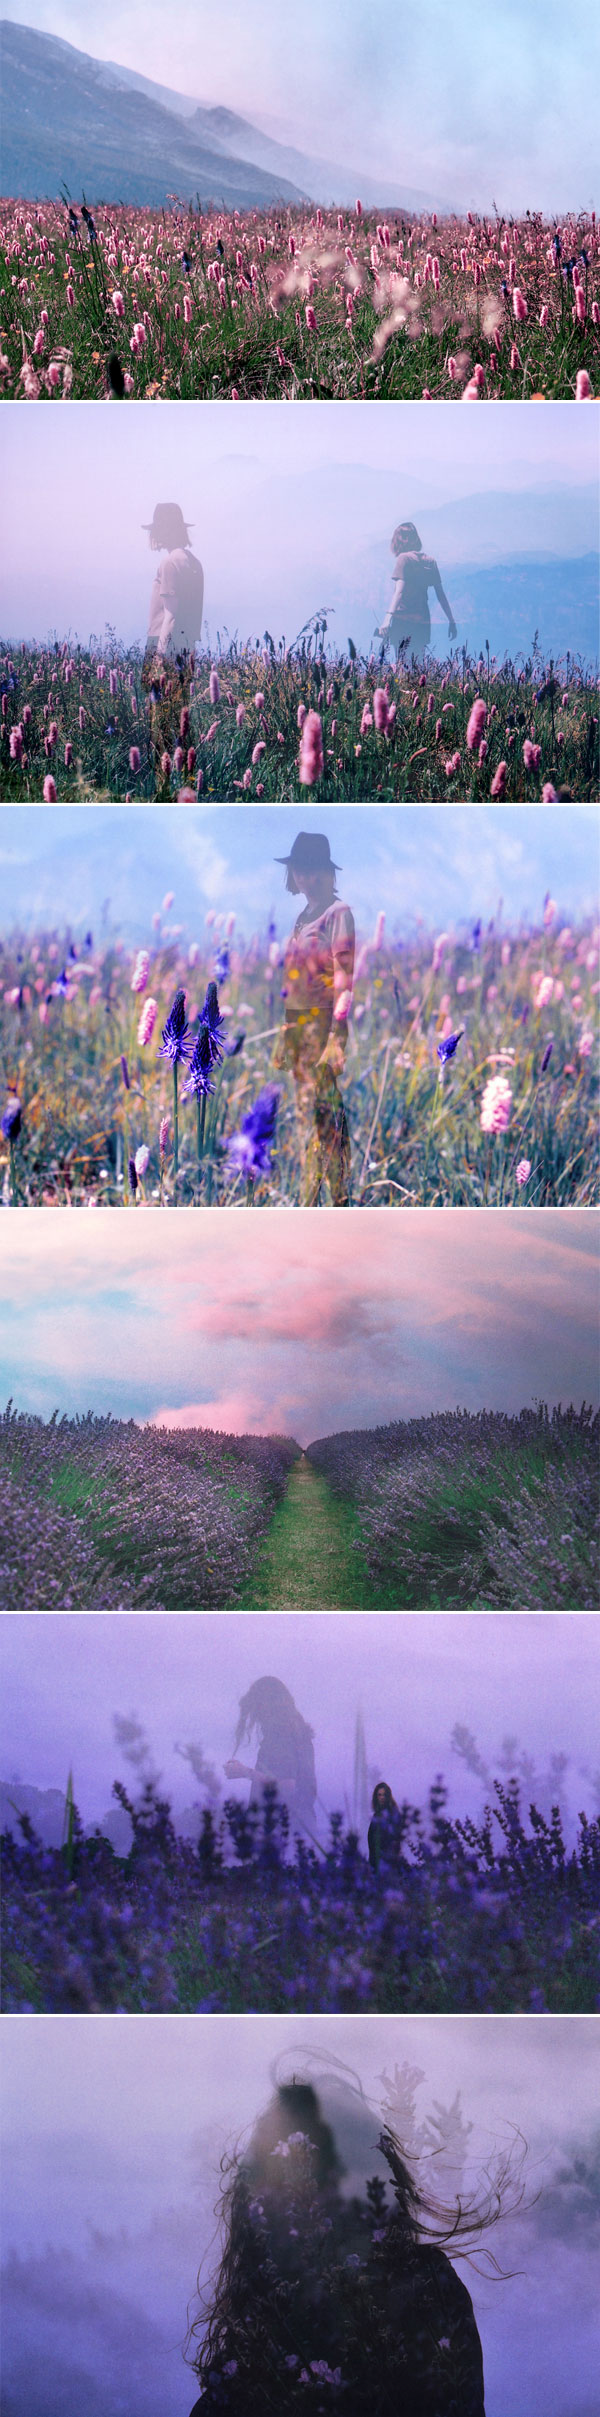 Summer Fields by Maya Beano | Photography